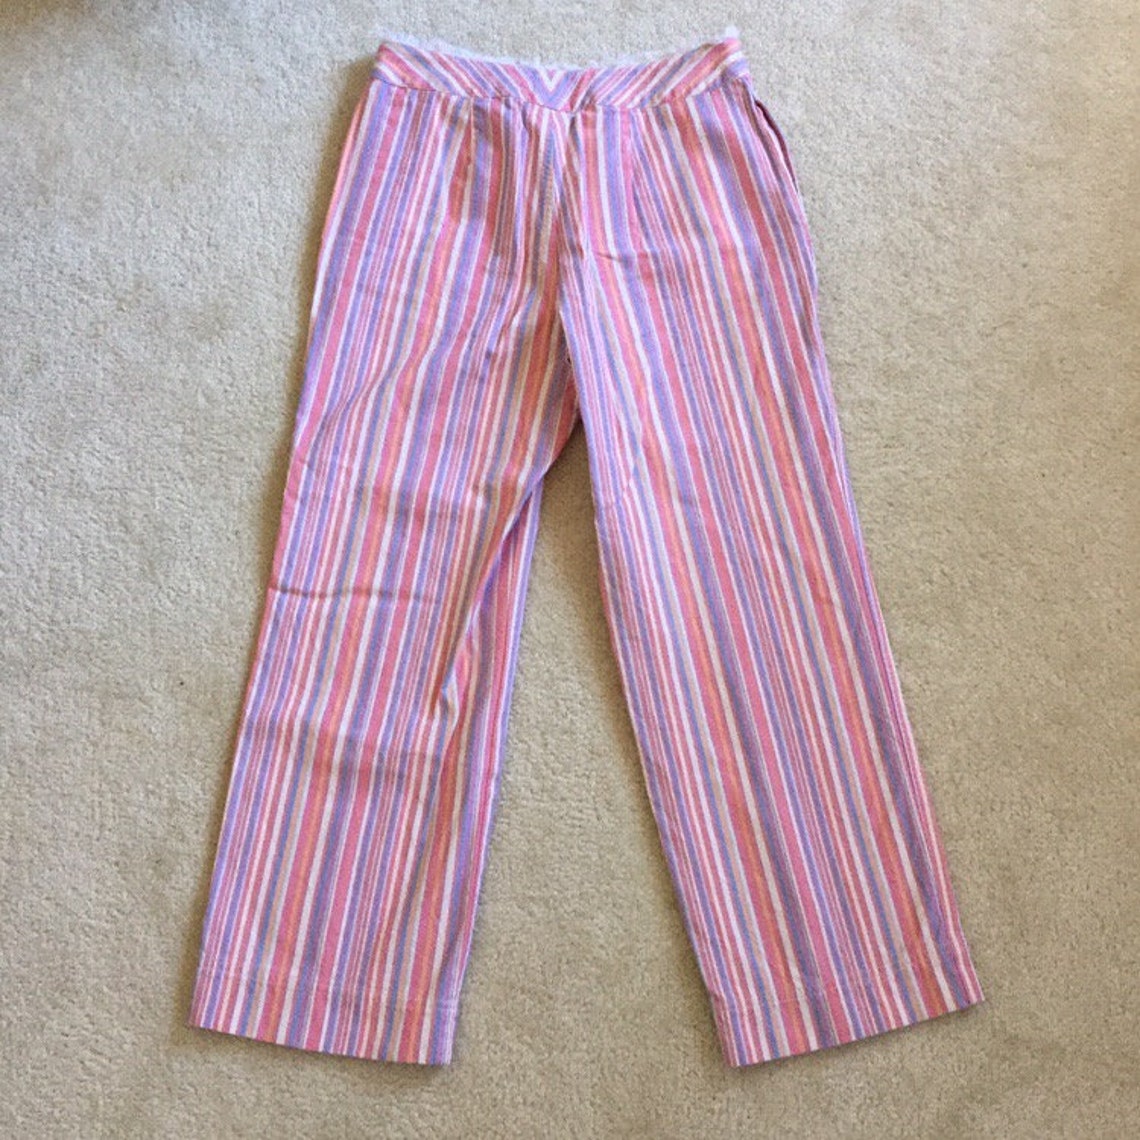 Vintage striped pants colorful early 2000s stripe pants | Etsy